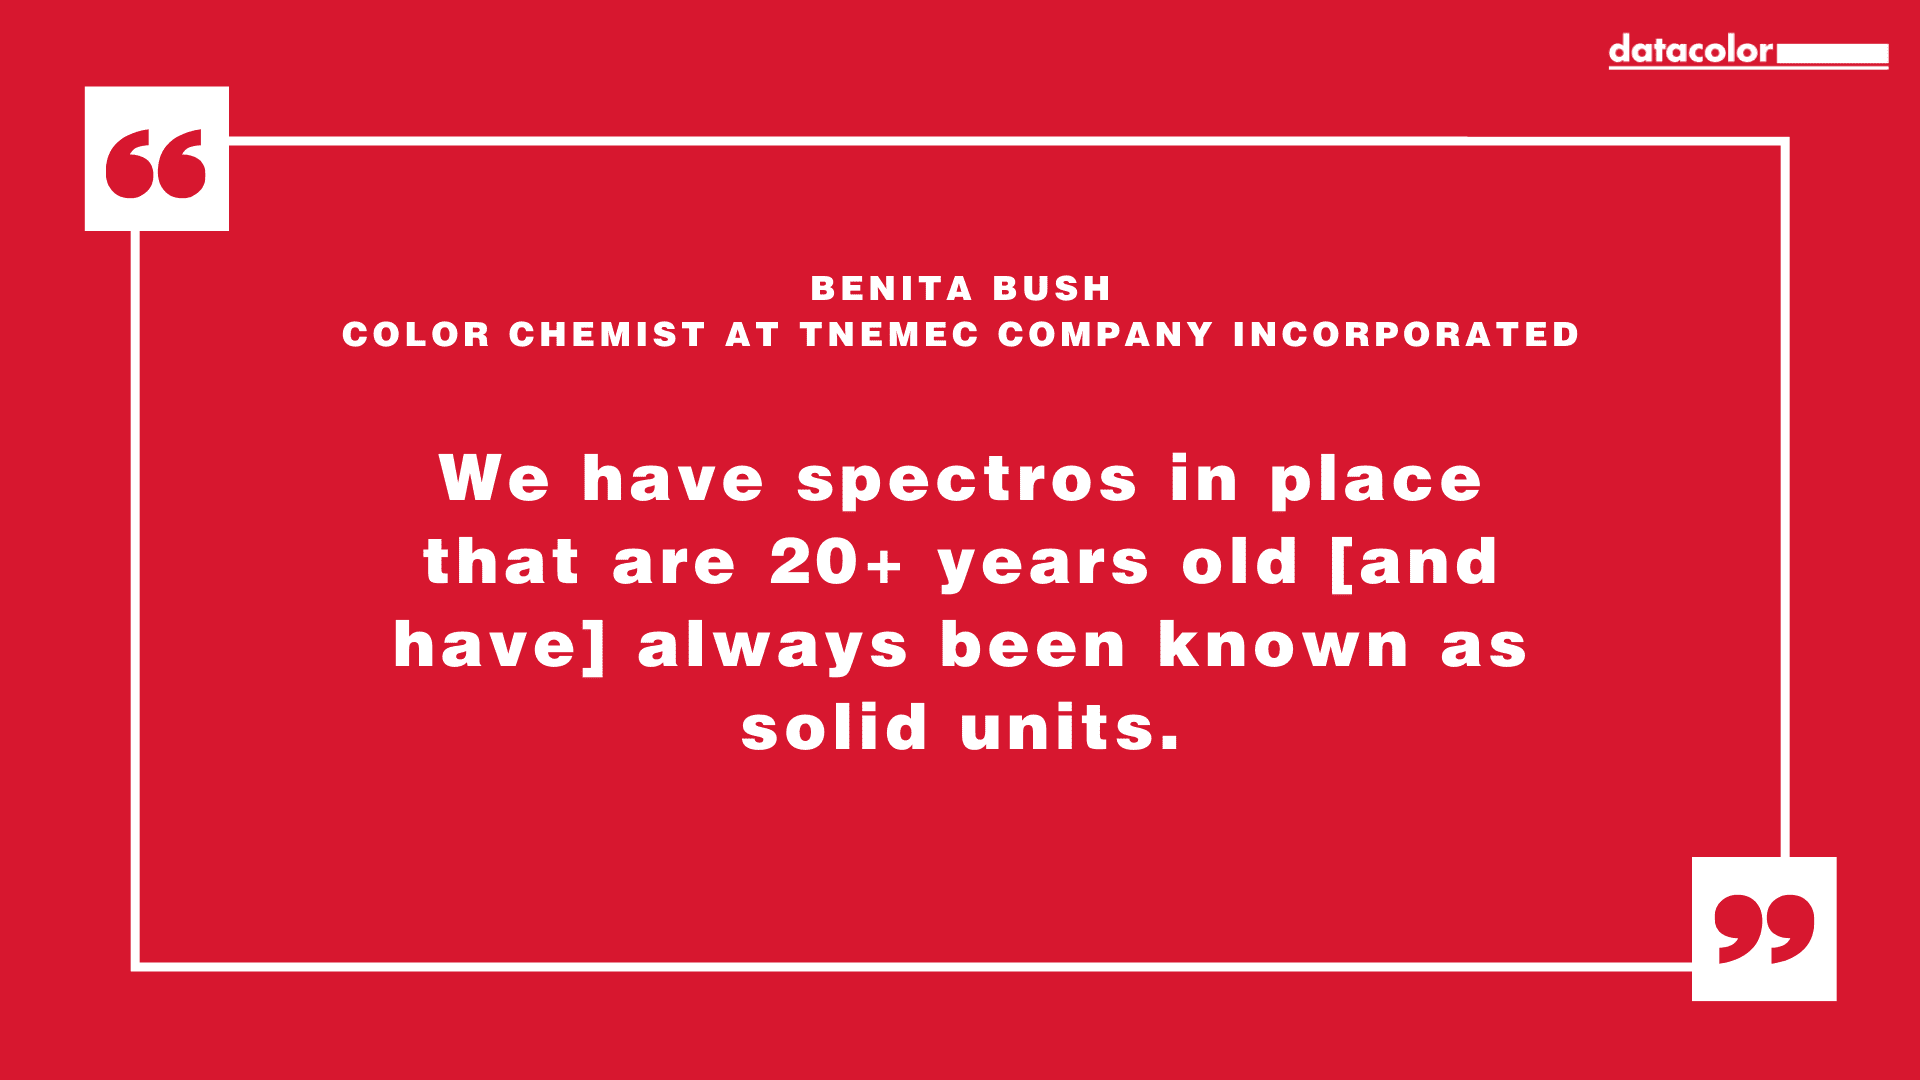 Zitat von Benita Bush, Farbchemikerin bei Tnemec Company Incorporated